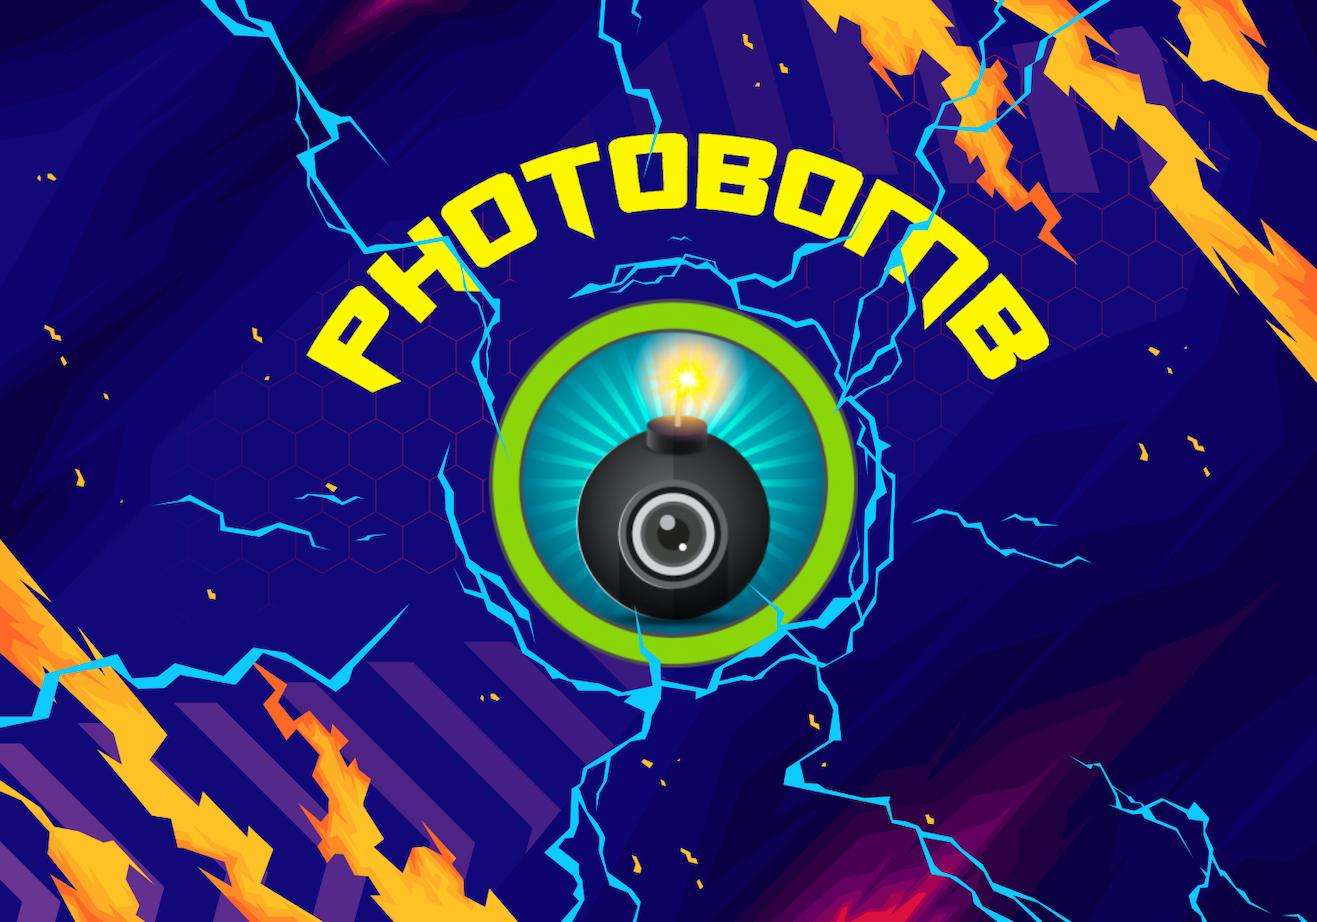 En este momento estás viendo Photobomb – Writeup